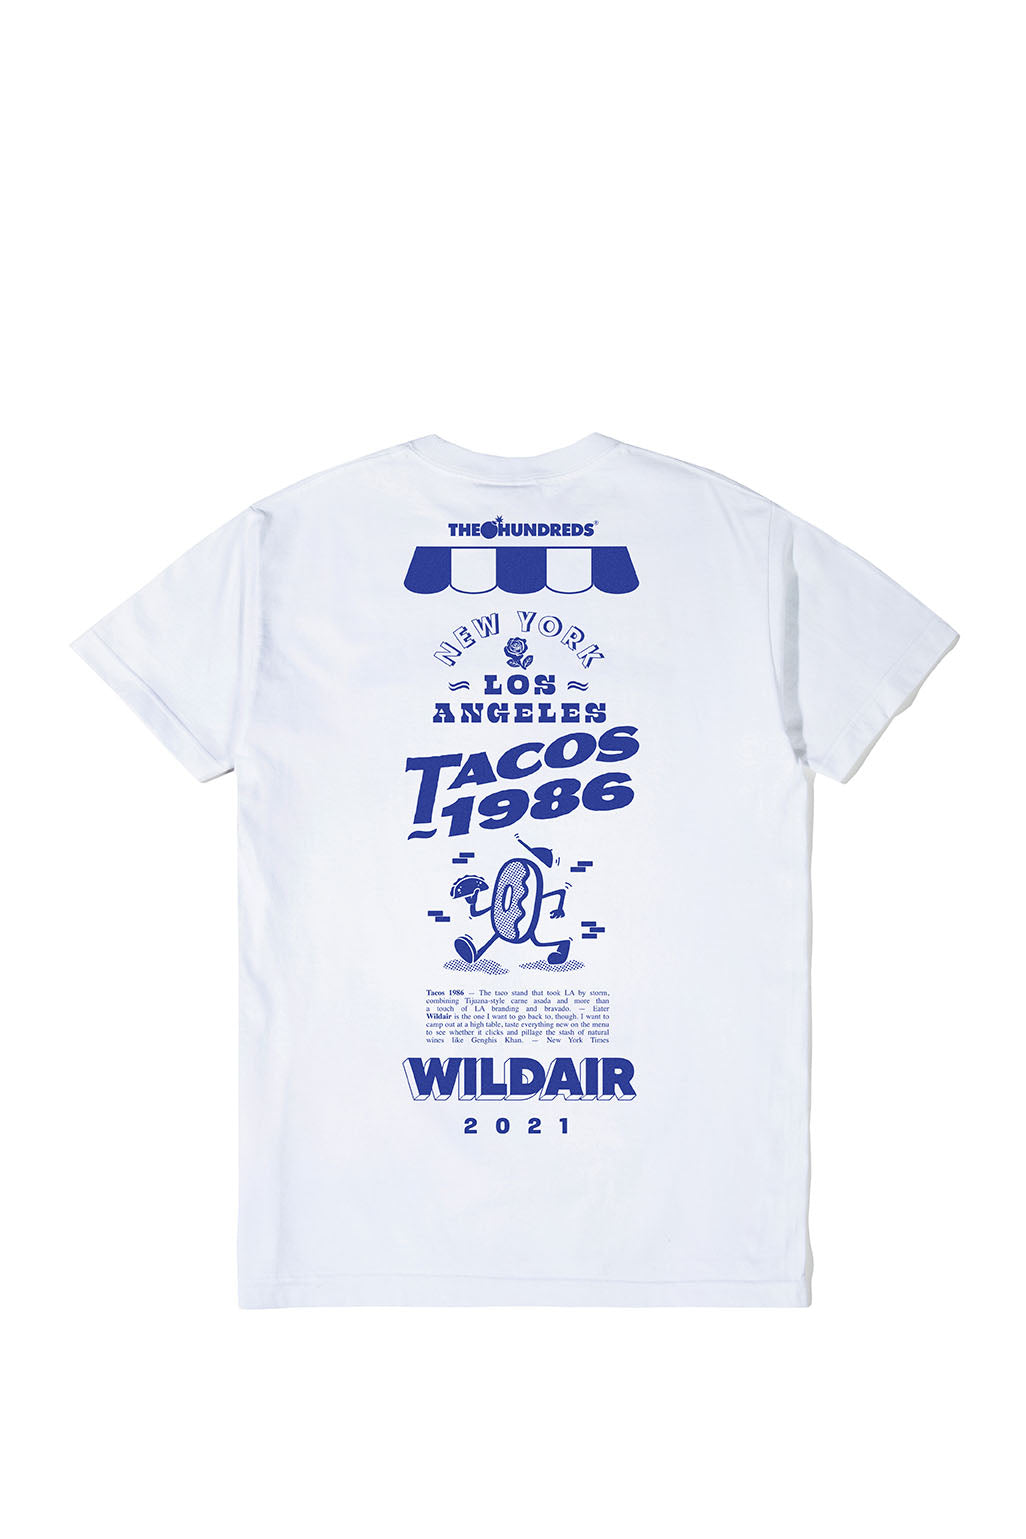 Wildair Tacos 1986 T-Shirt